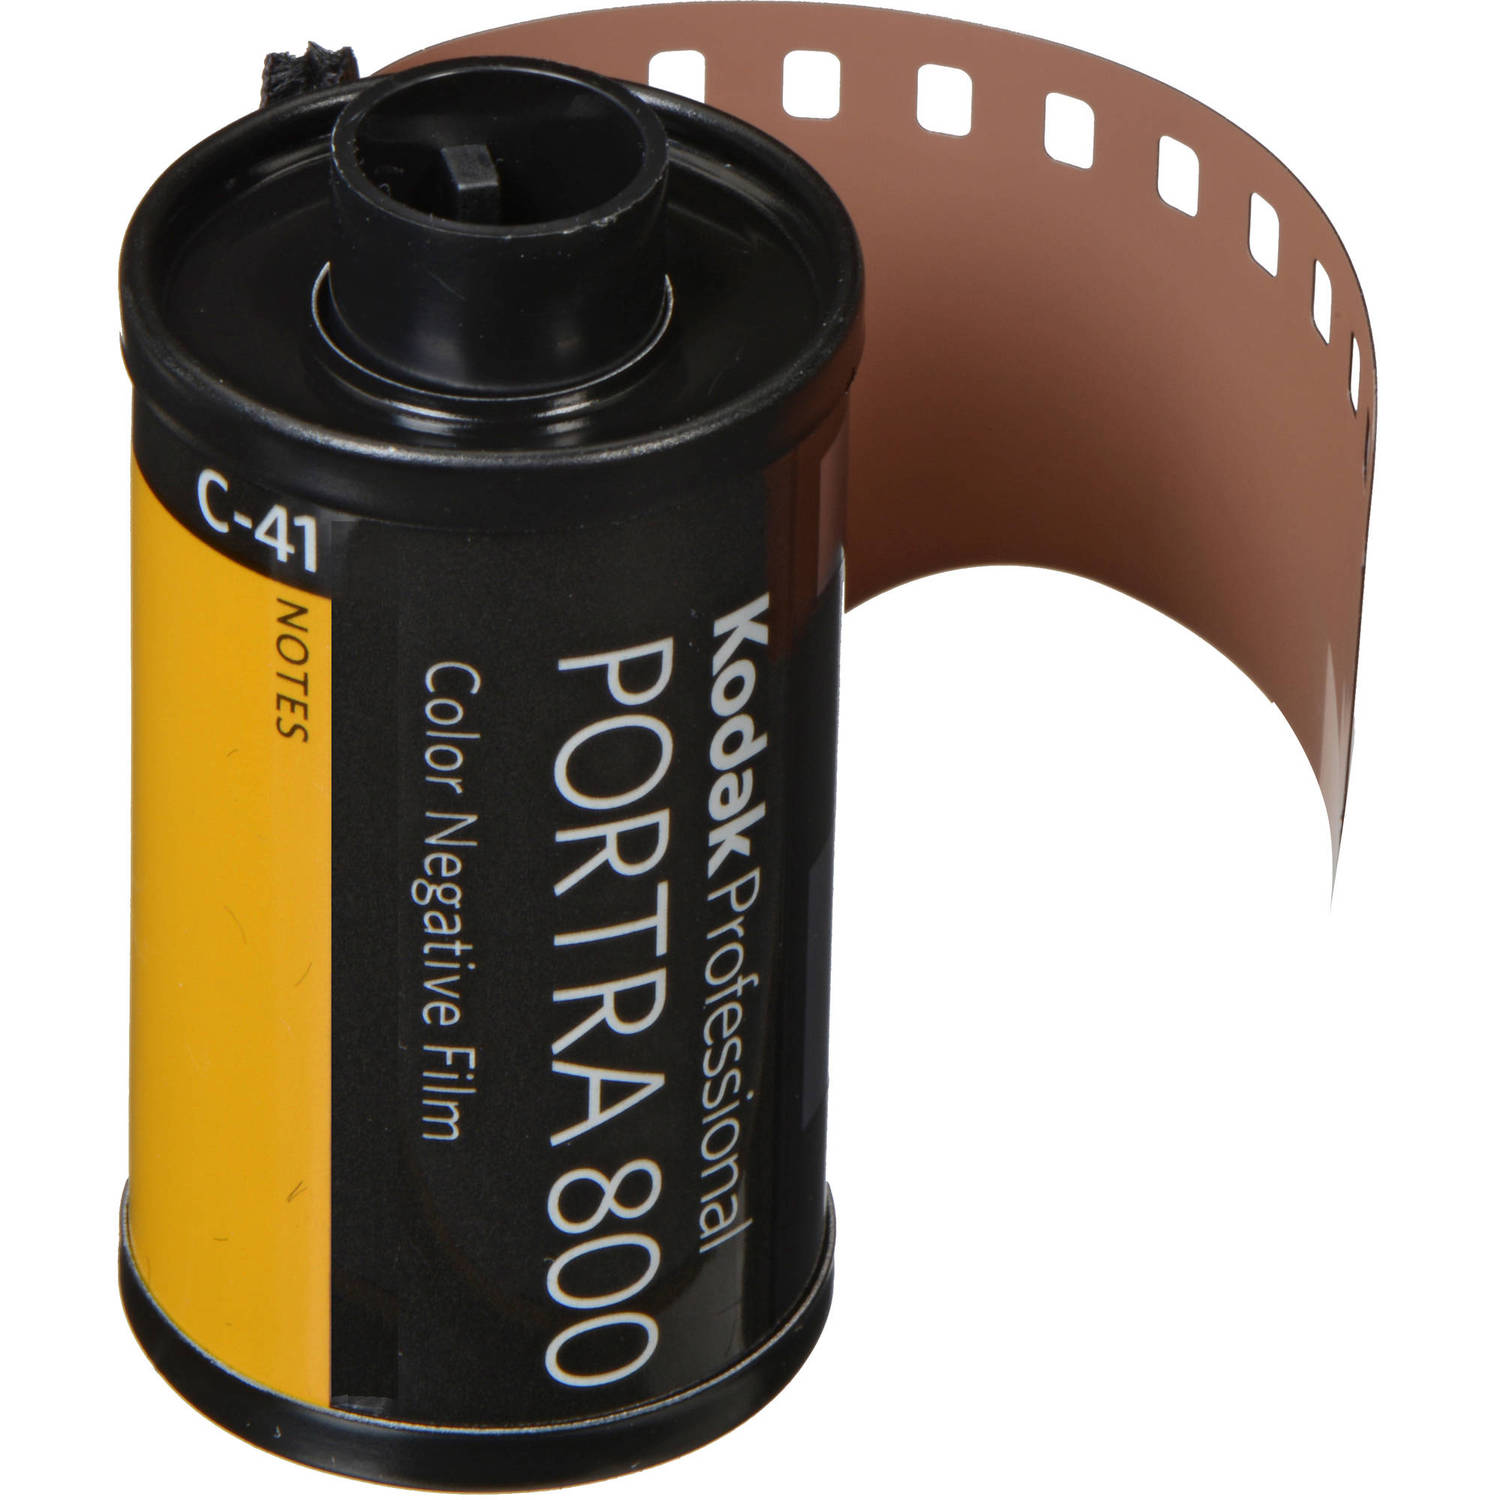 Kodak Portra 800-36 Professional Color Negative Film (35mm Roll Film, 36 Exposures, Single Roll)